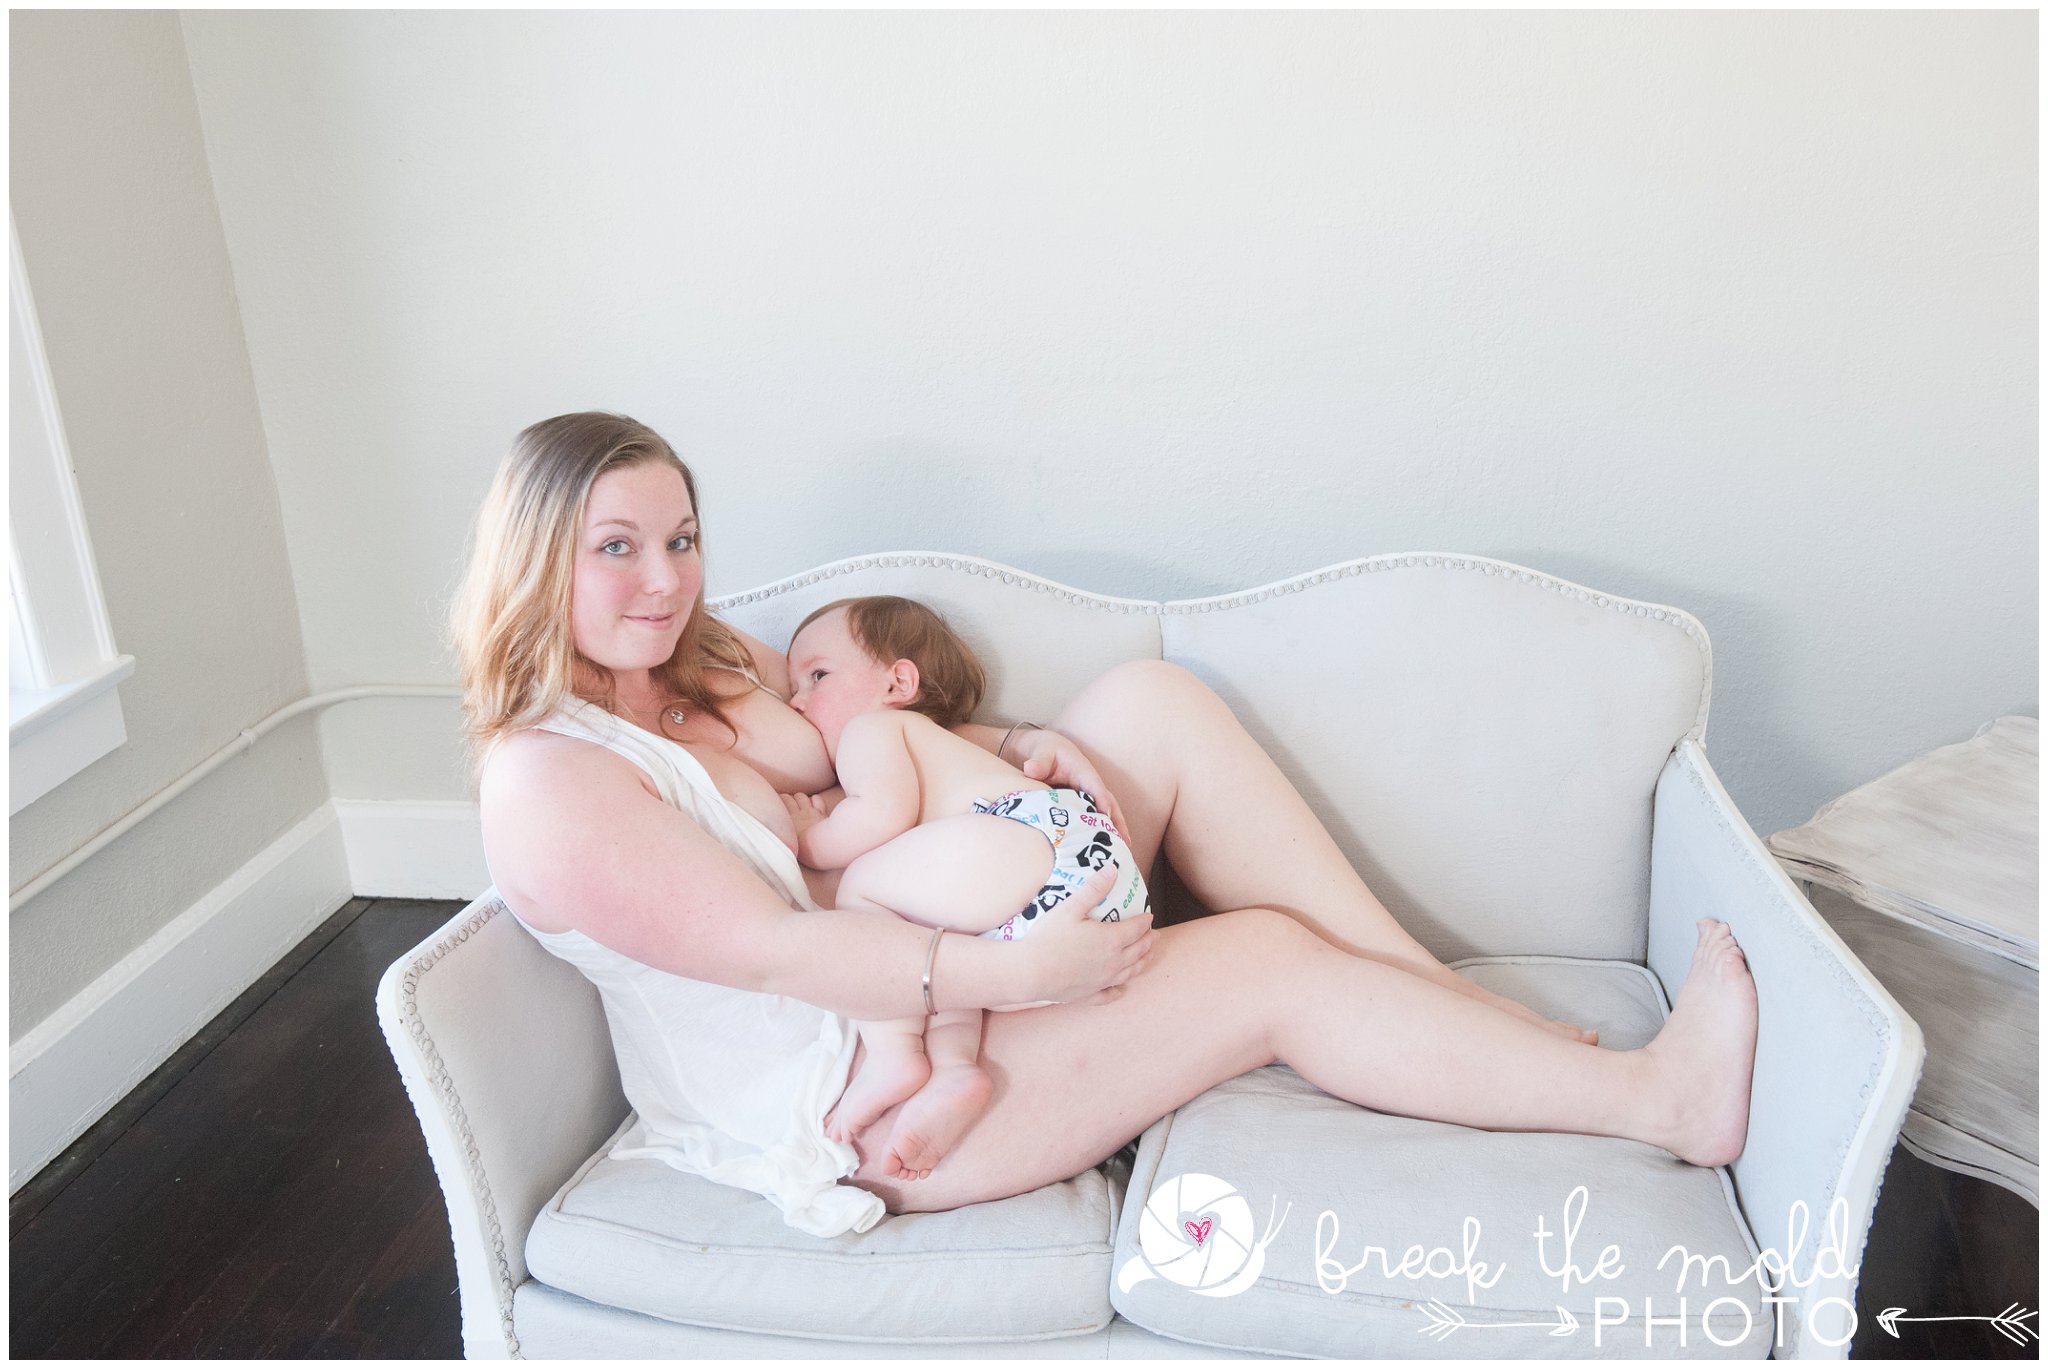 break-the-mold-photo-nursing-body-love-baby-pregnant-women-powerful-breastfeeding-sessions_7208.jpg